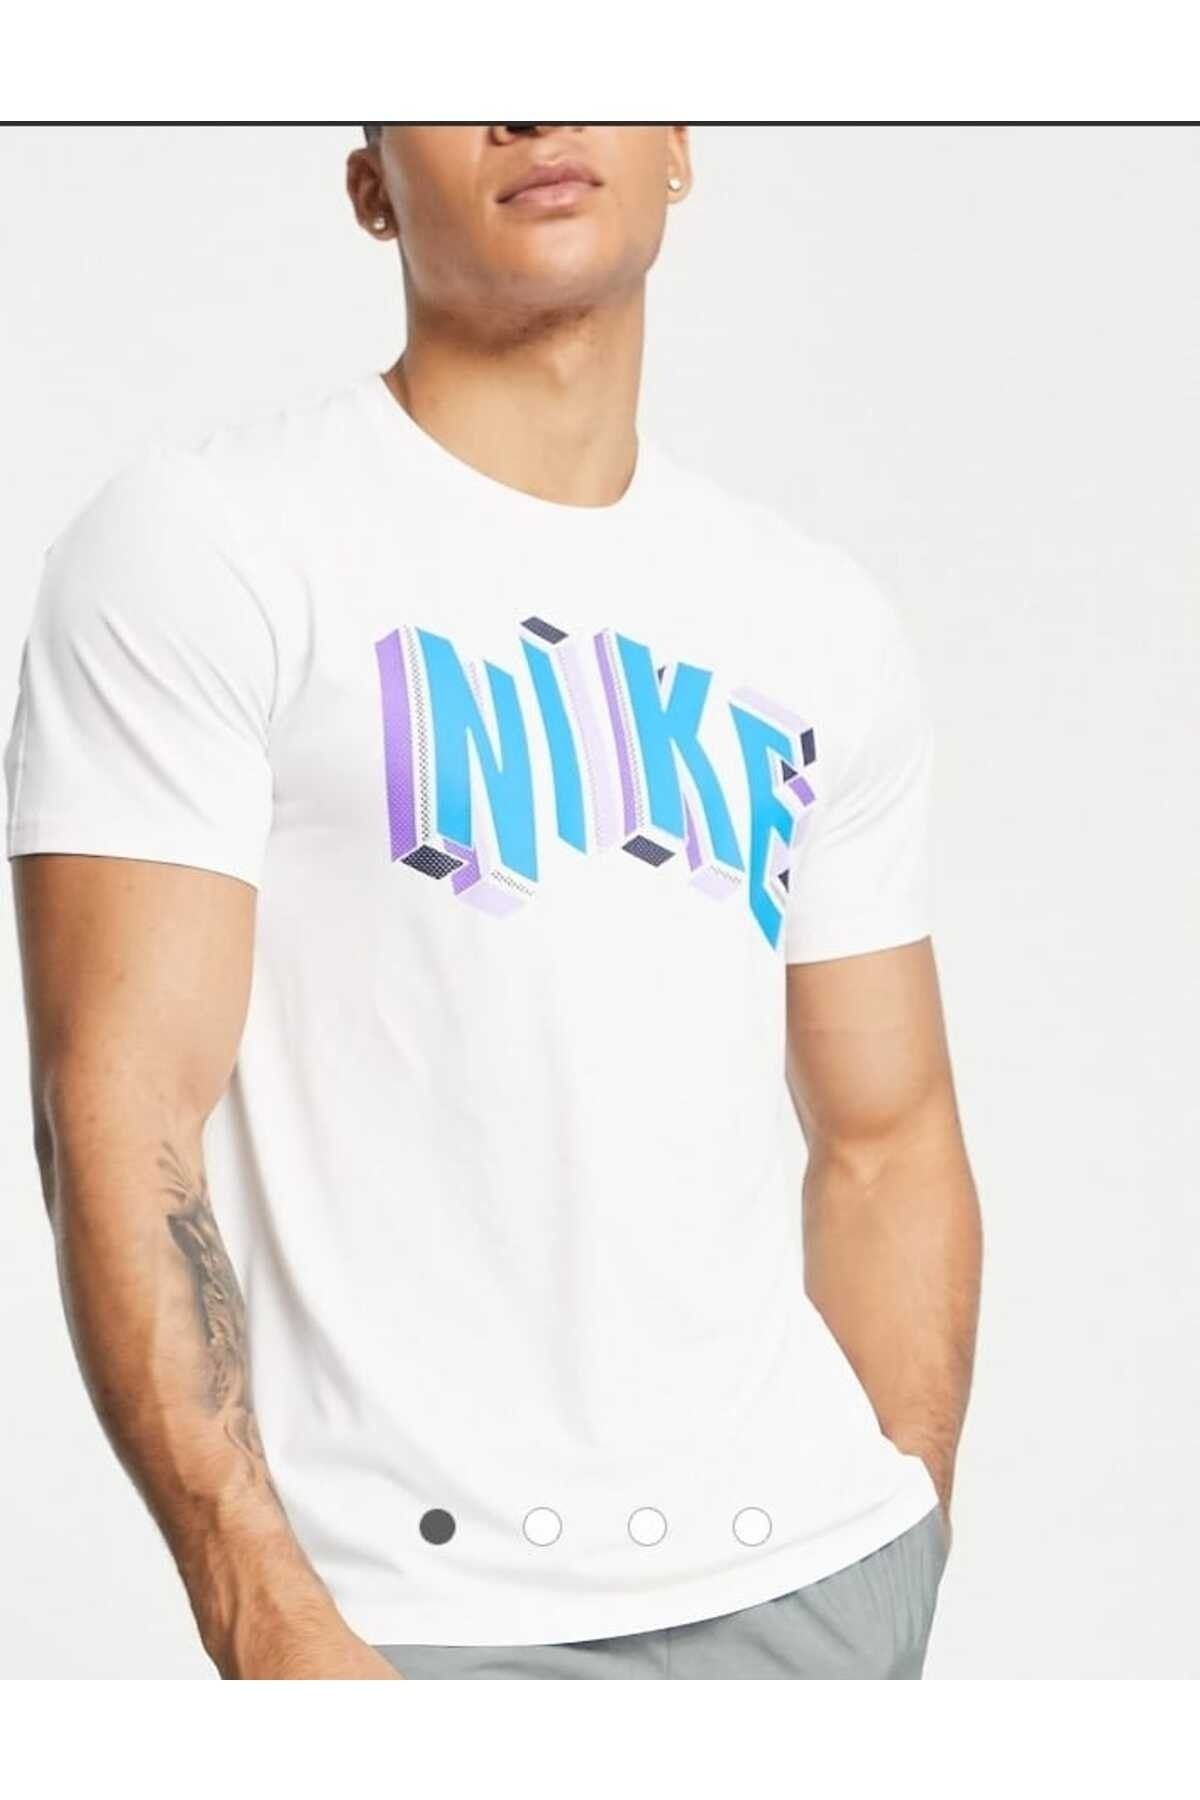 Nike Men's Hyper Dri-FIT T Shirt